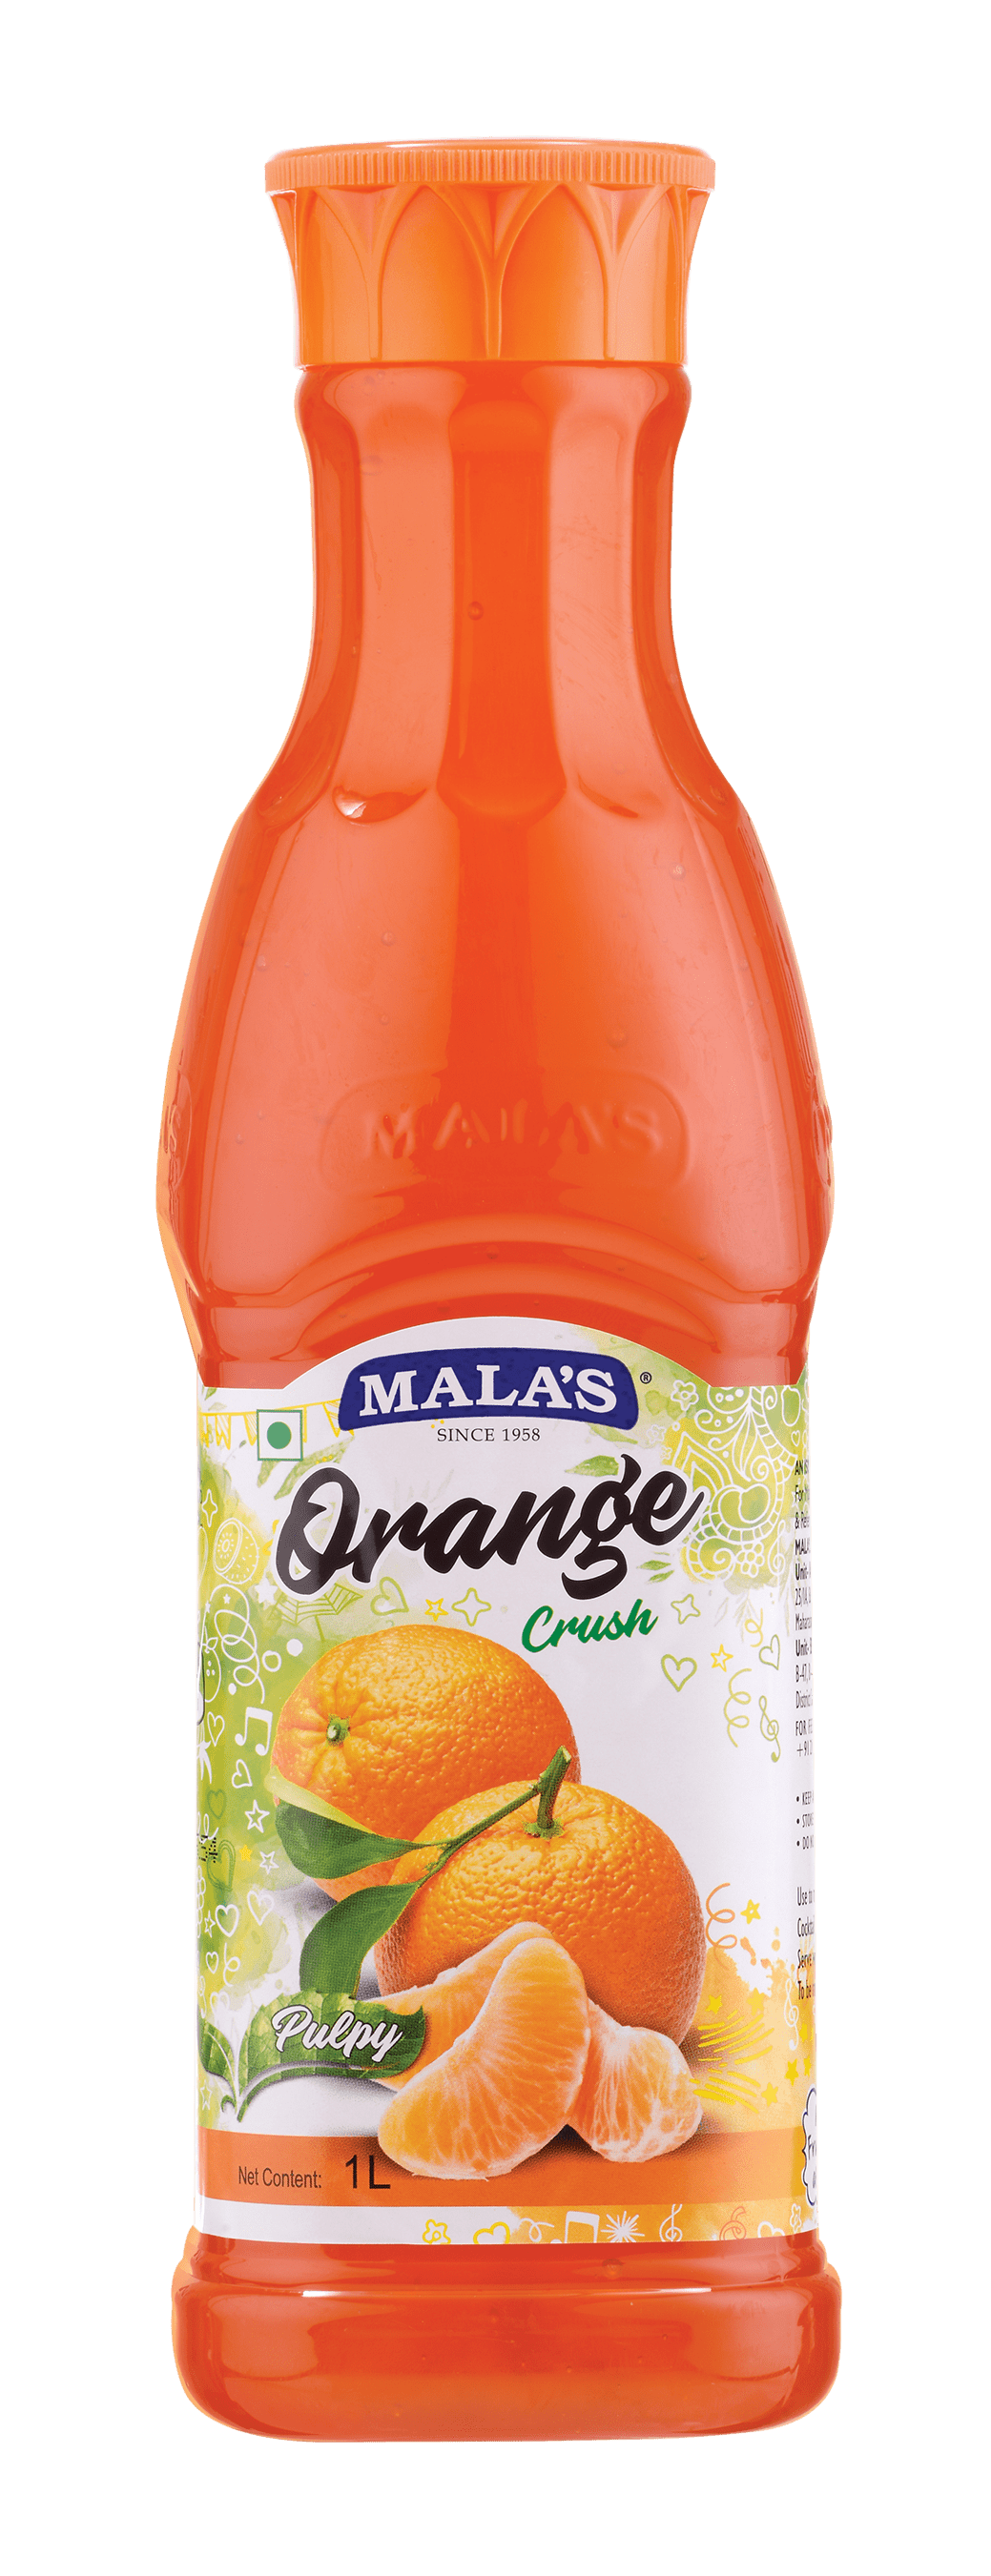 Mala's Orange Crush 1000ML Crush Mala's